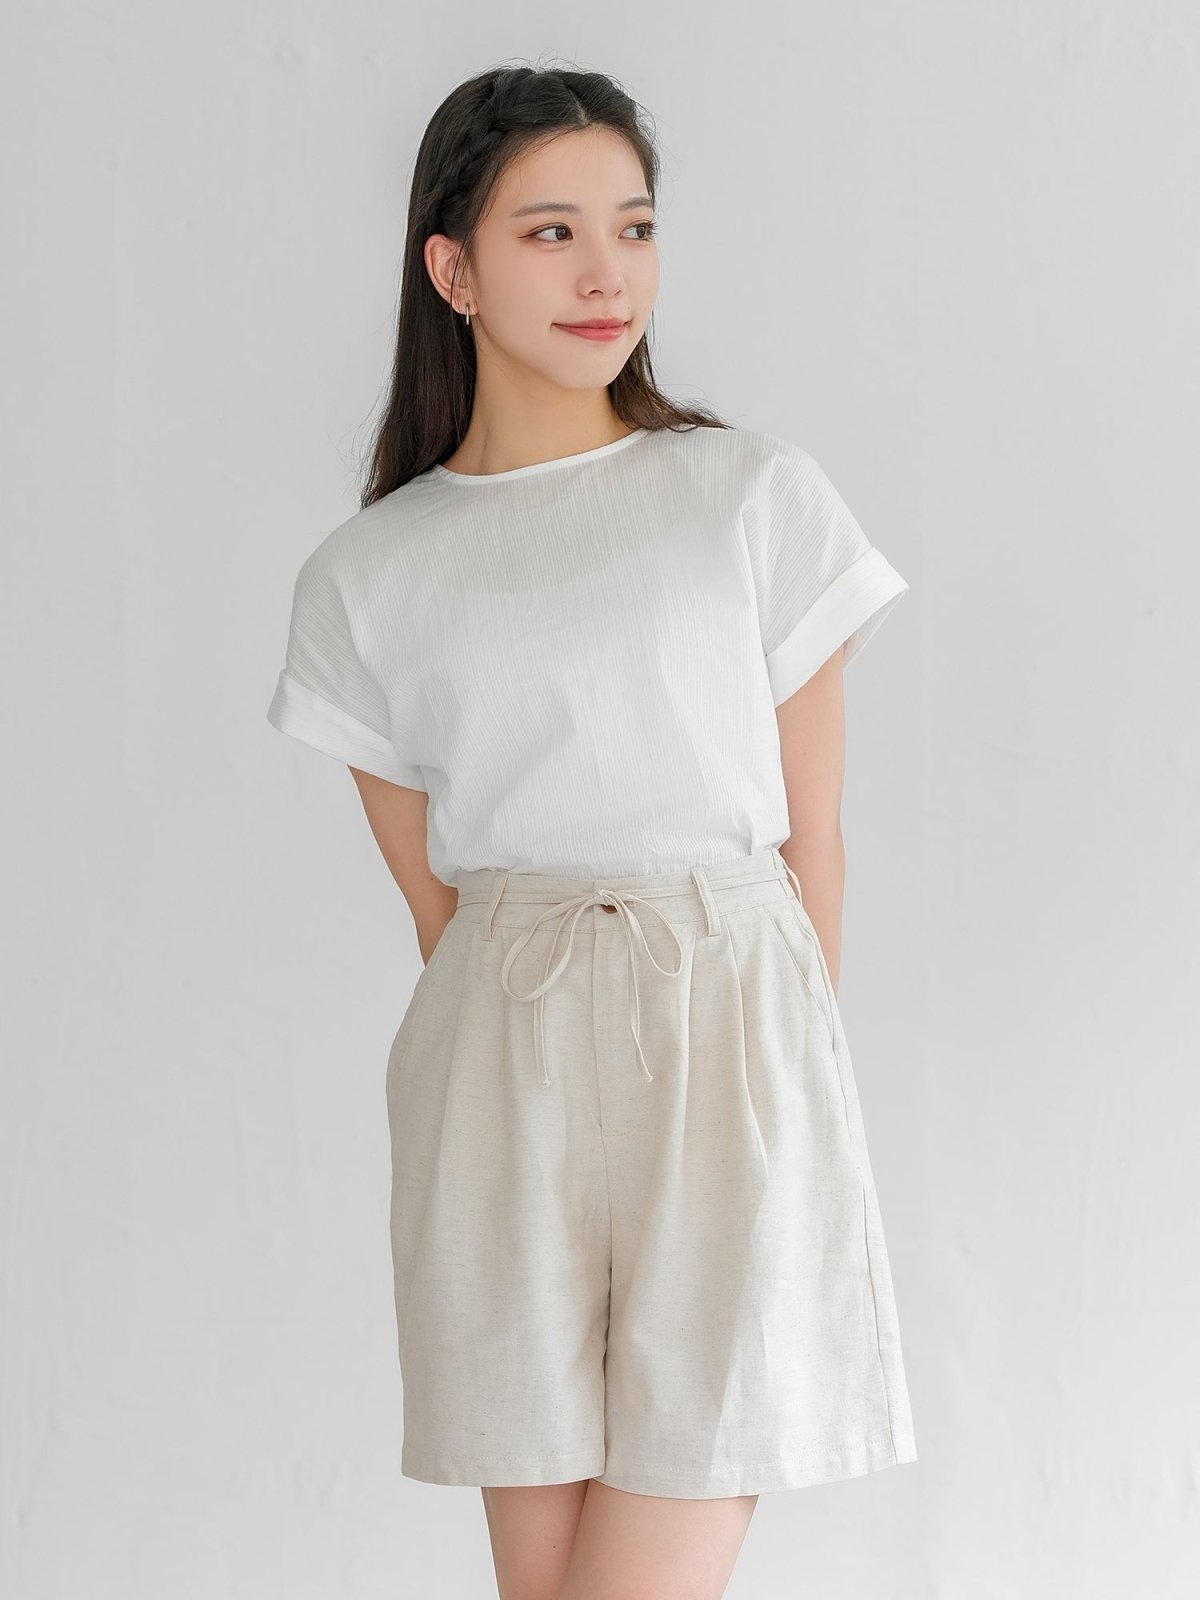 Leah Tie Waist Linen Cotton Shorts - DAG-G-220194OatMilkS - Oat Milk - S - D'ZAGE Designs